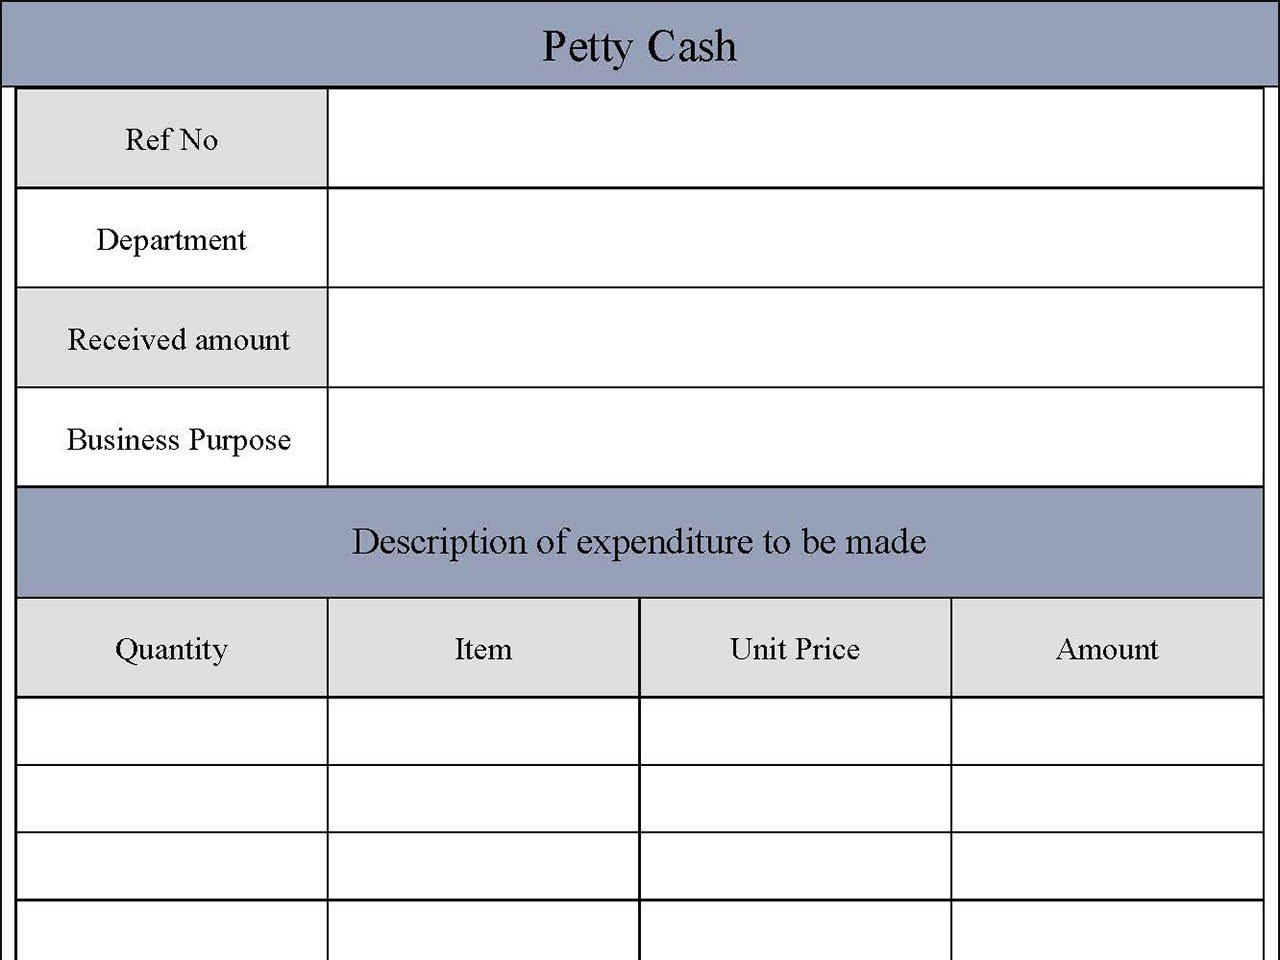 Petty Cash Form